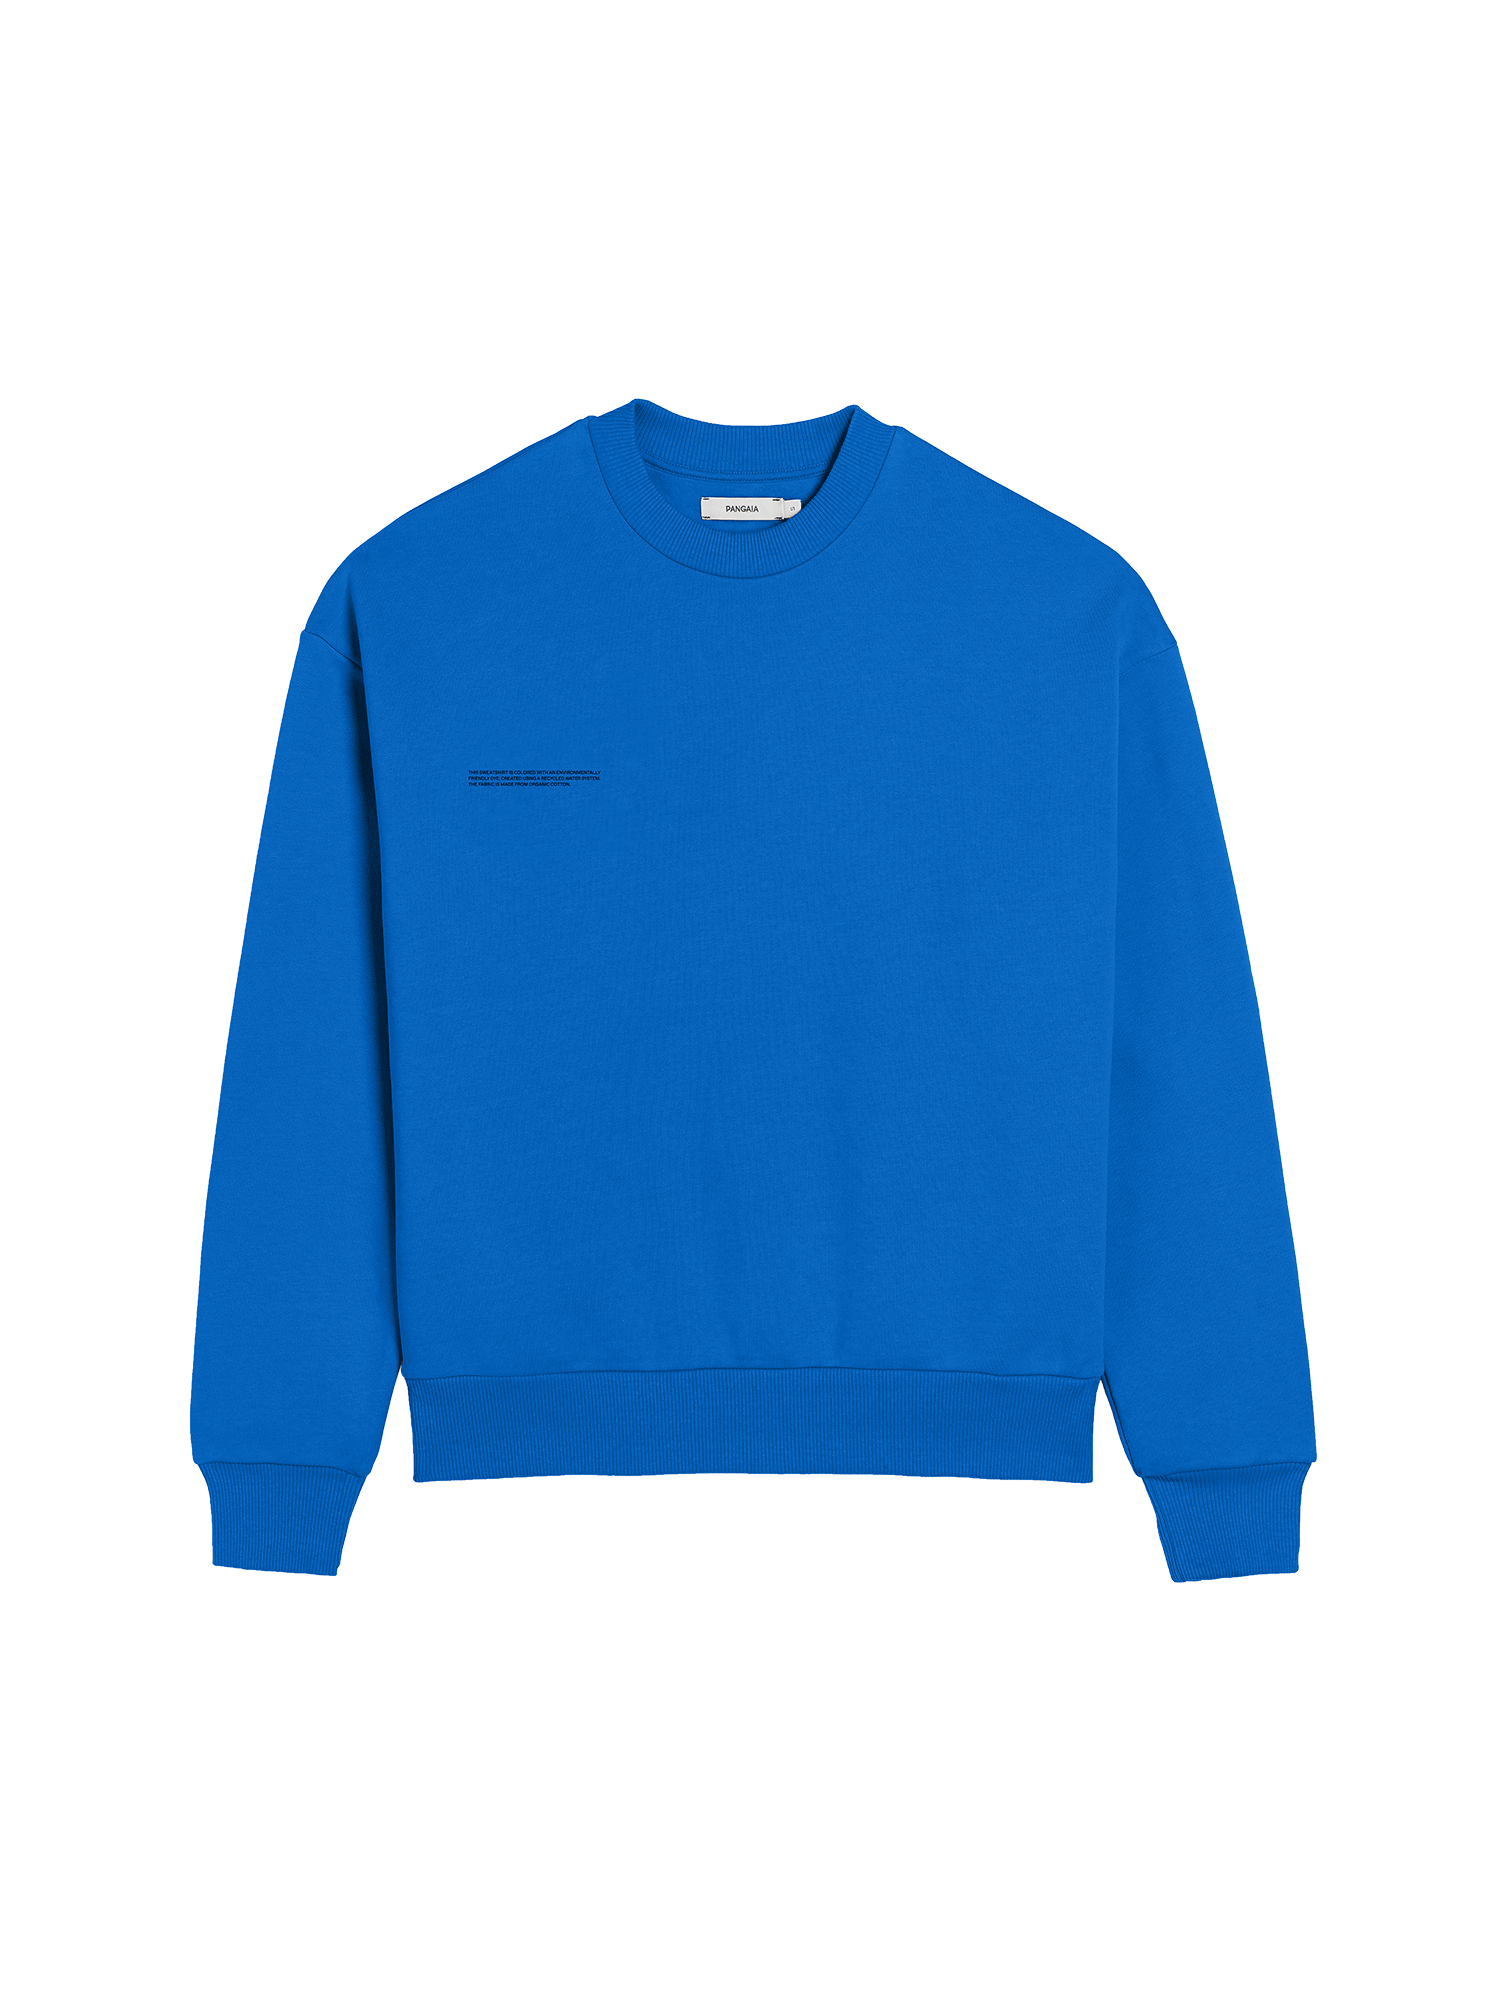 365 Midweight Sweatshirt - Cobalt Blue - Pangaia